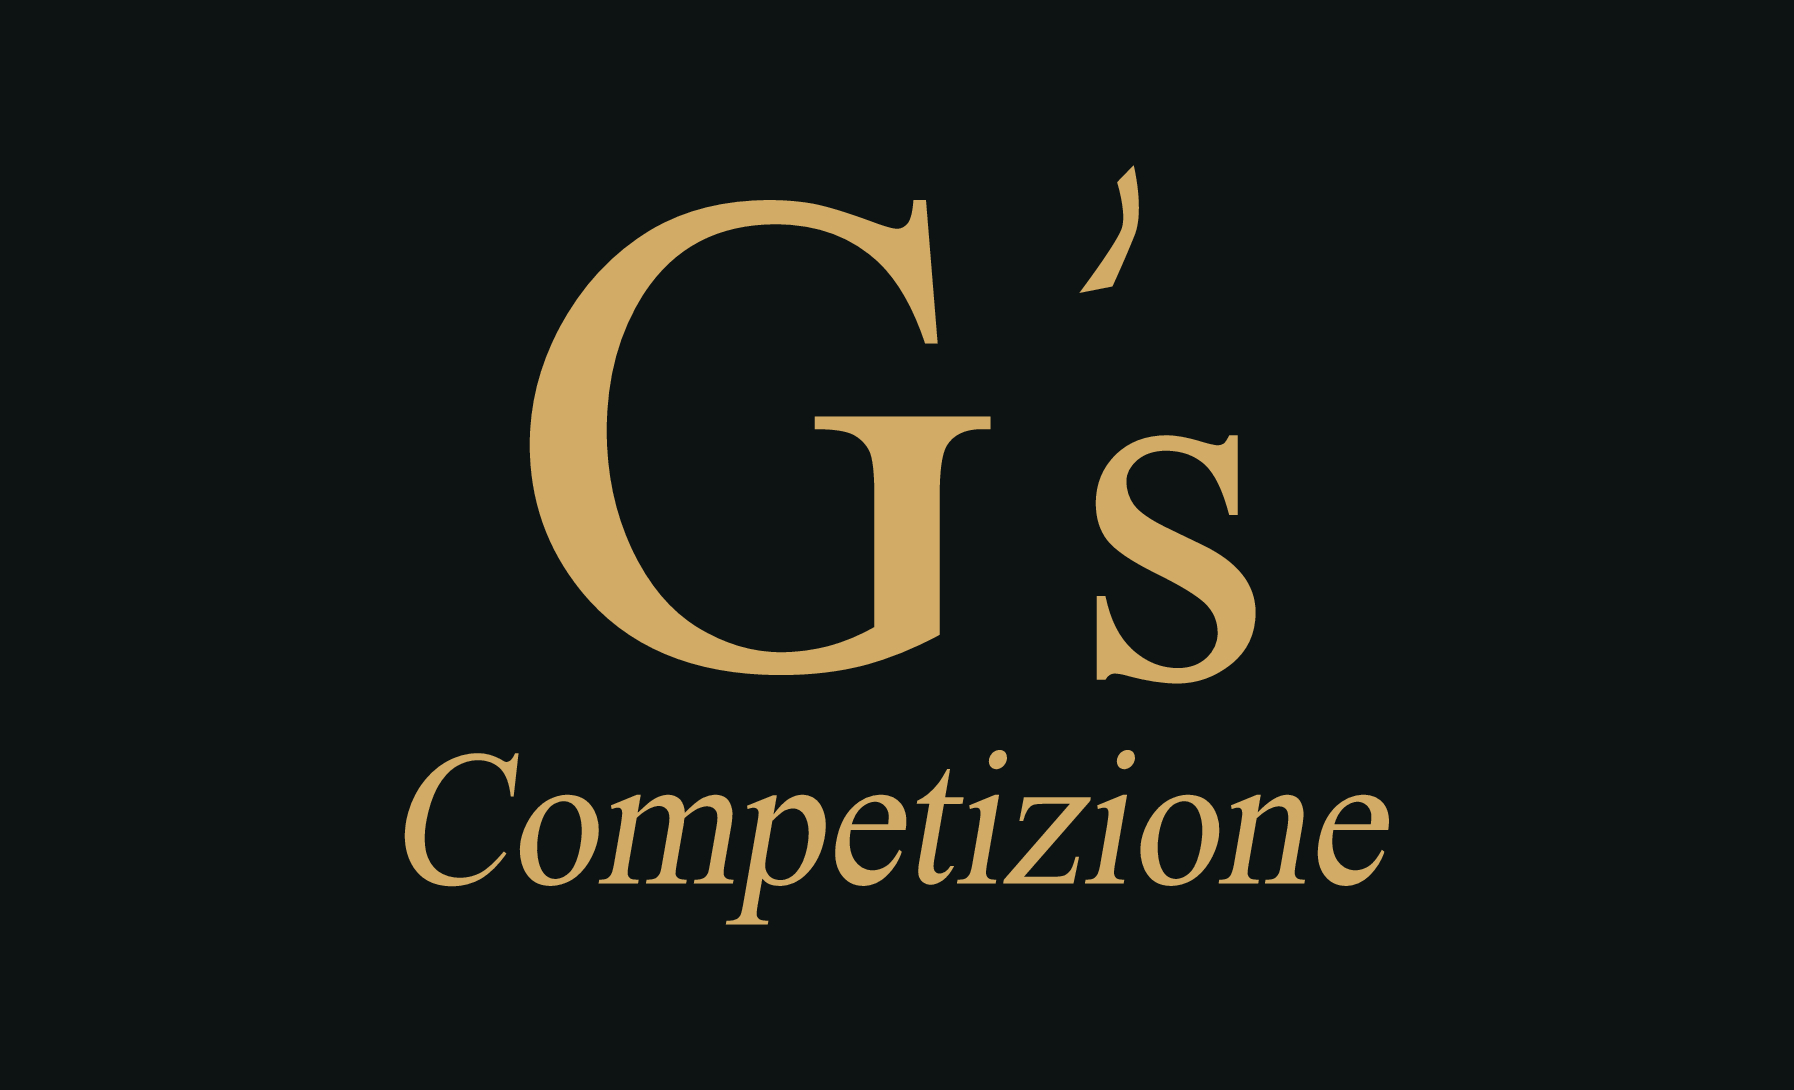 (c) Gscompetizione.com